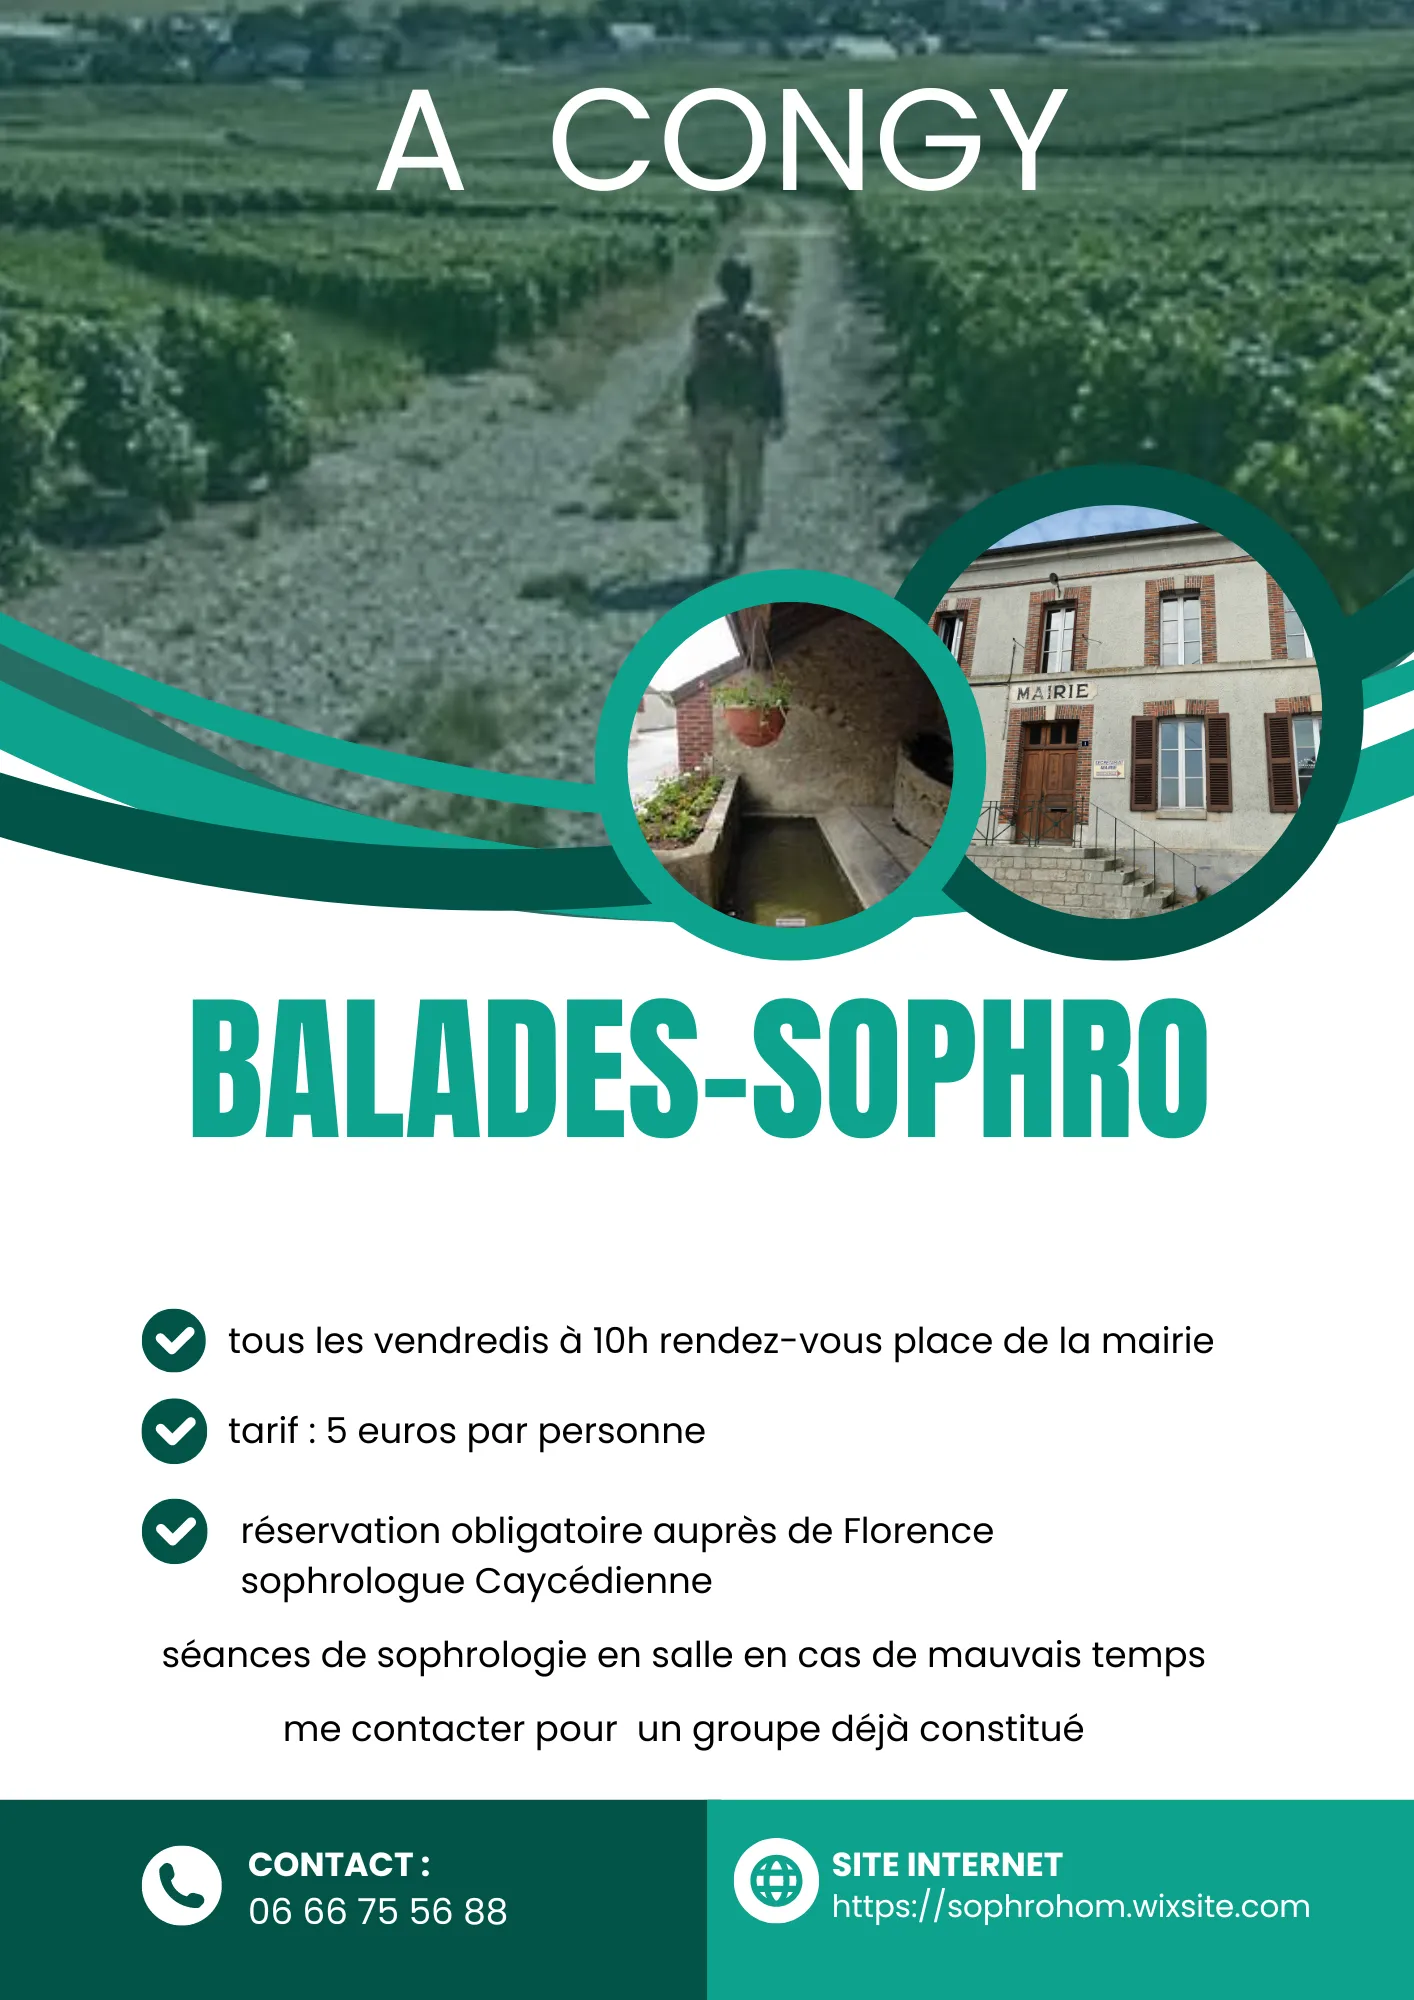 Image qui illustre: Balades Sophro à Congy - 1